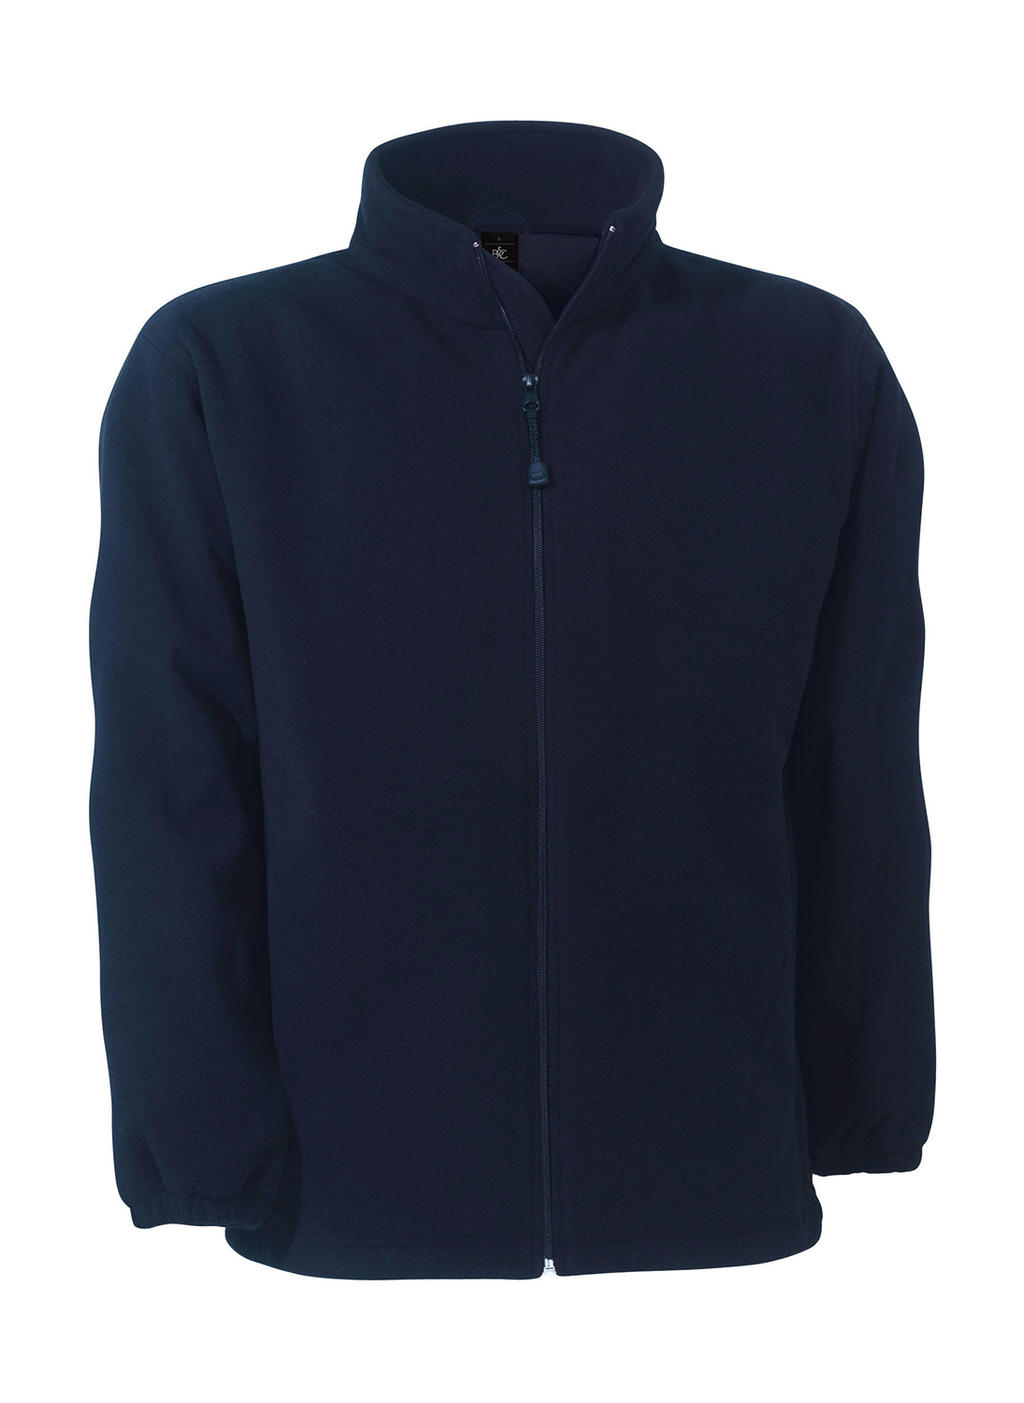  WindProtek Waterproof Fleece Jacket in Farbe Navy